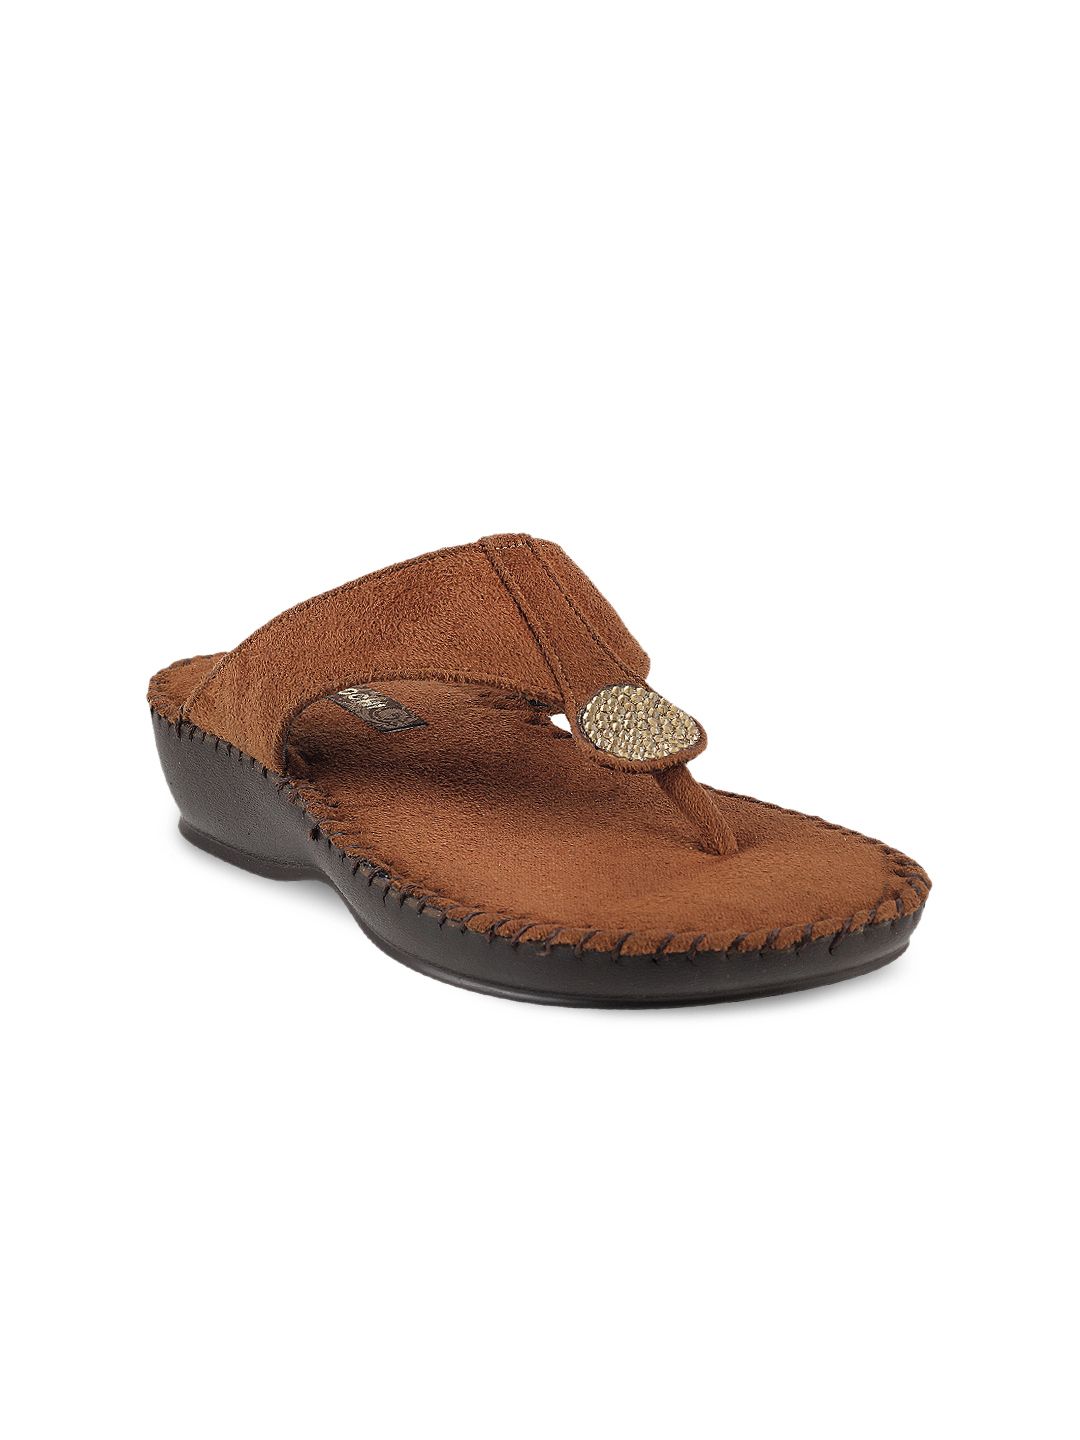 Mochi Women Tan Brown Sandals Price in India